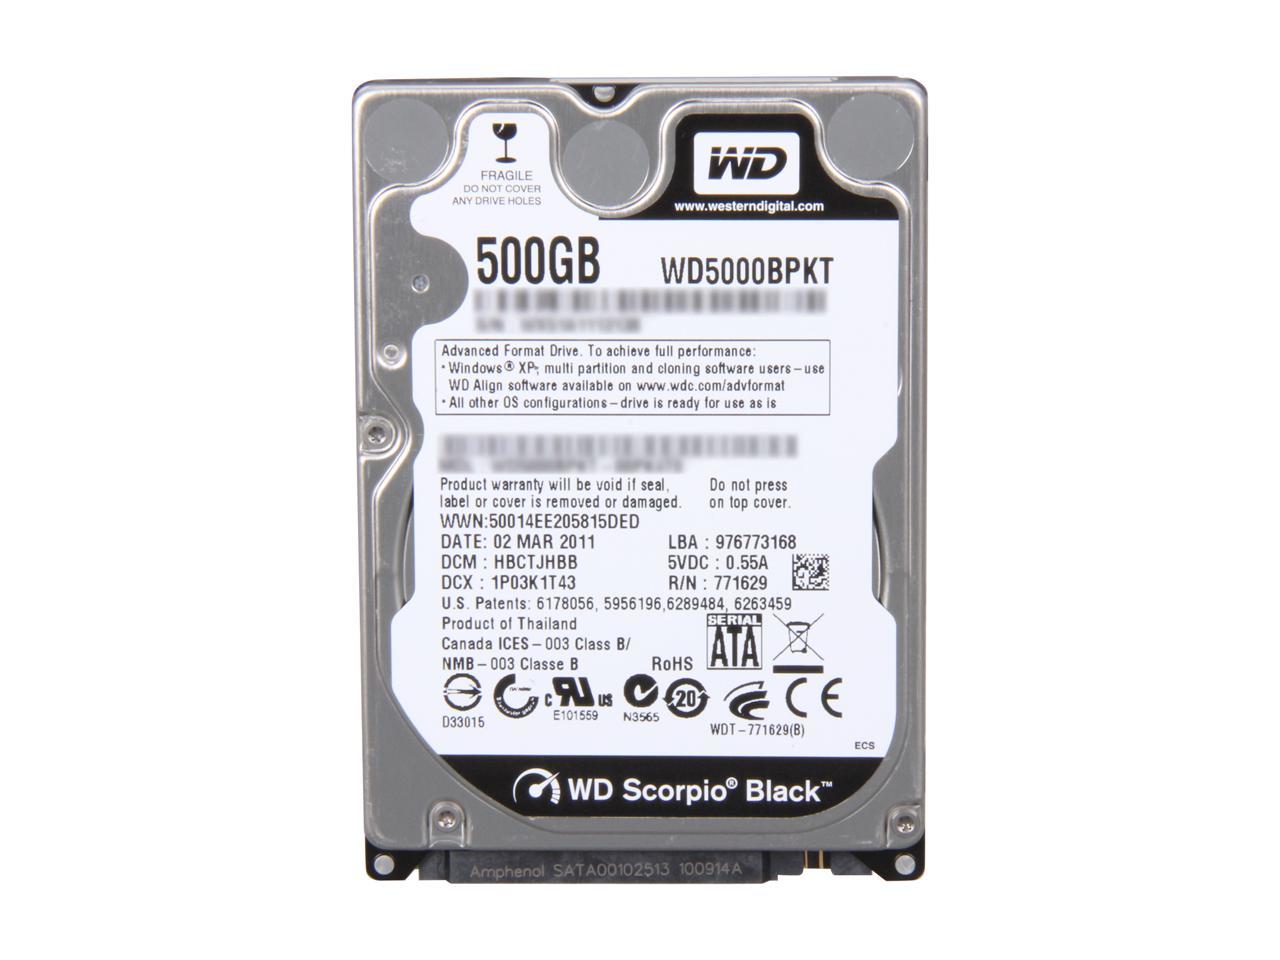 Western Digital Scorpio Black wd5000bpkt 500GB 7200 RPM 16MB Cache SATA 3.0Gb/s 2.5" Internal Notebook Hard Drive Bare Drive